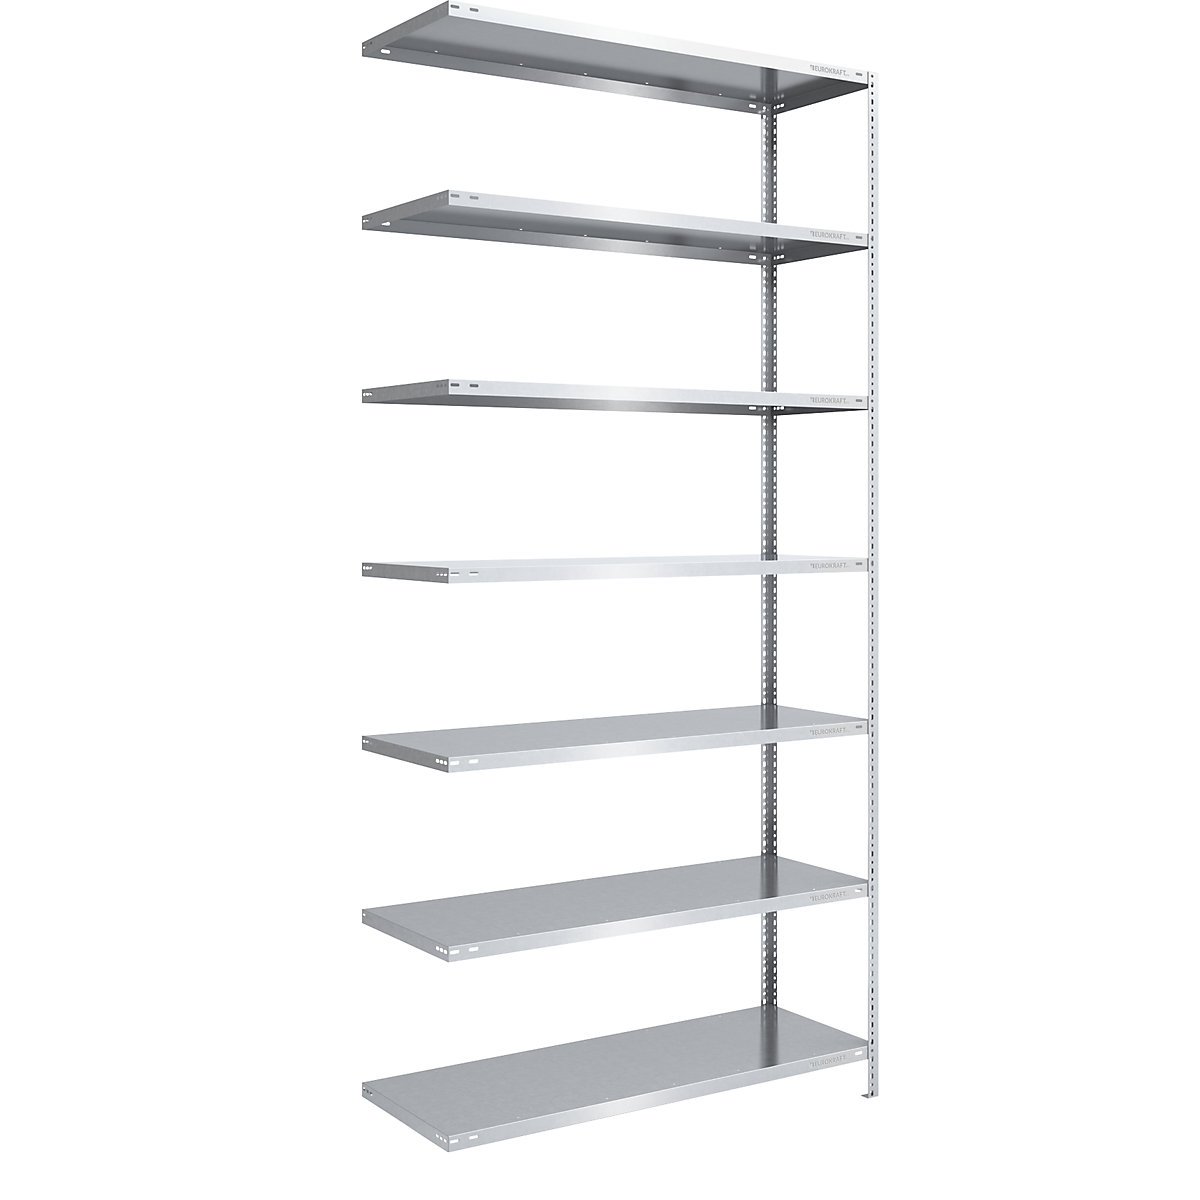 Bolt-together storage shelving, zinc plated, medium duty – eurokraft pro, shelf unit height 3000 mm, shelf width 1300 mm, depth 600 mm, extension shelf unit-11